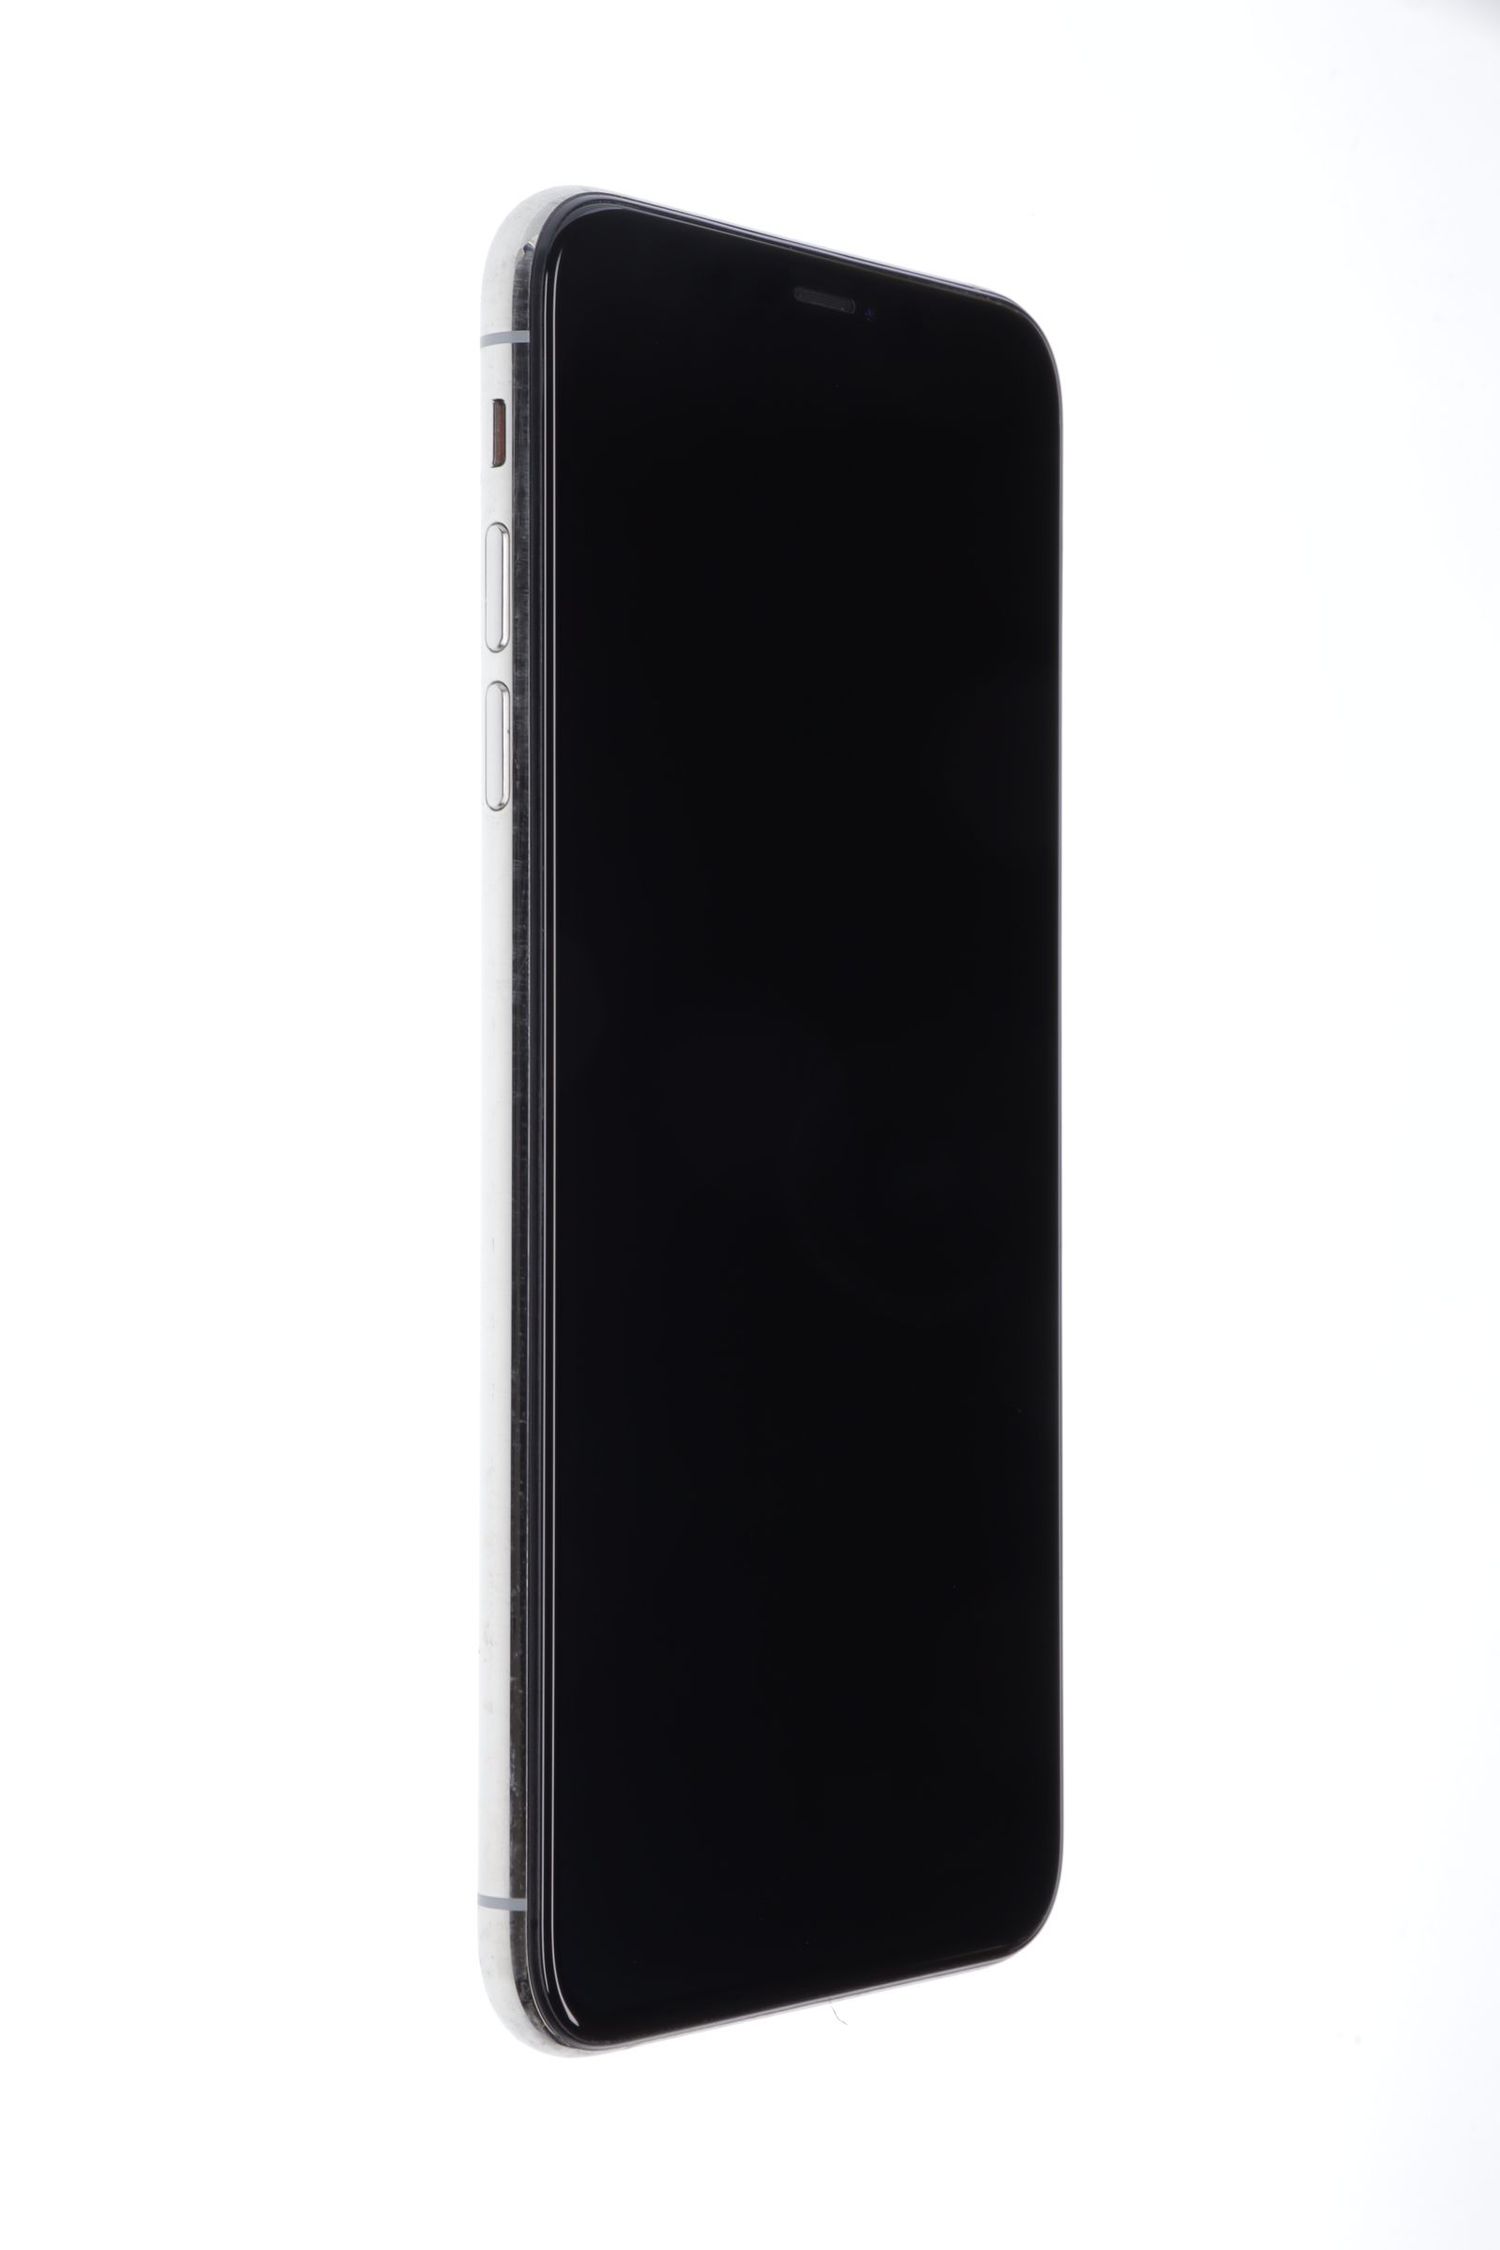 Mobiltelefon Apple iPhone XS Max, Silver, 64 GB, Foarte Bun